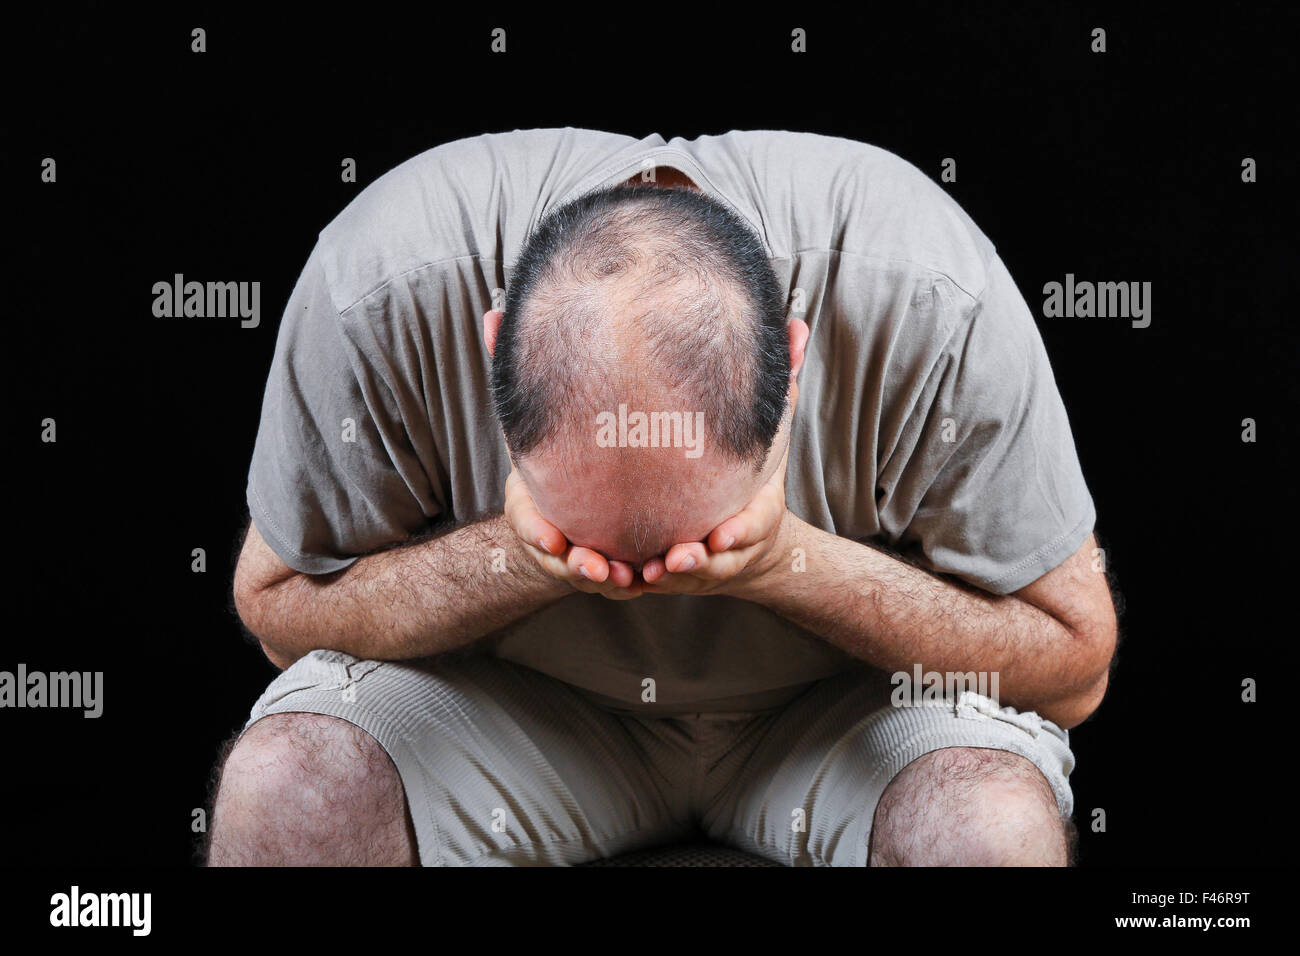 Depressed man Stock Photo